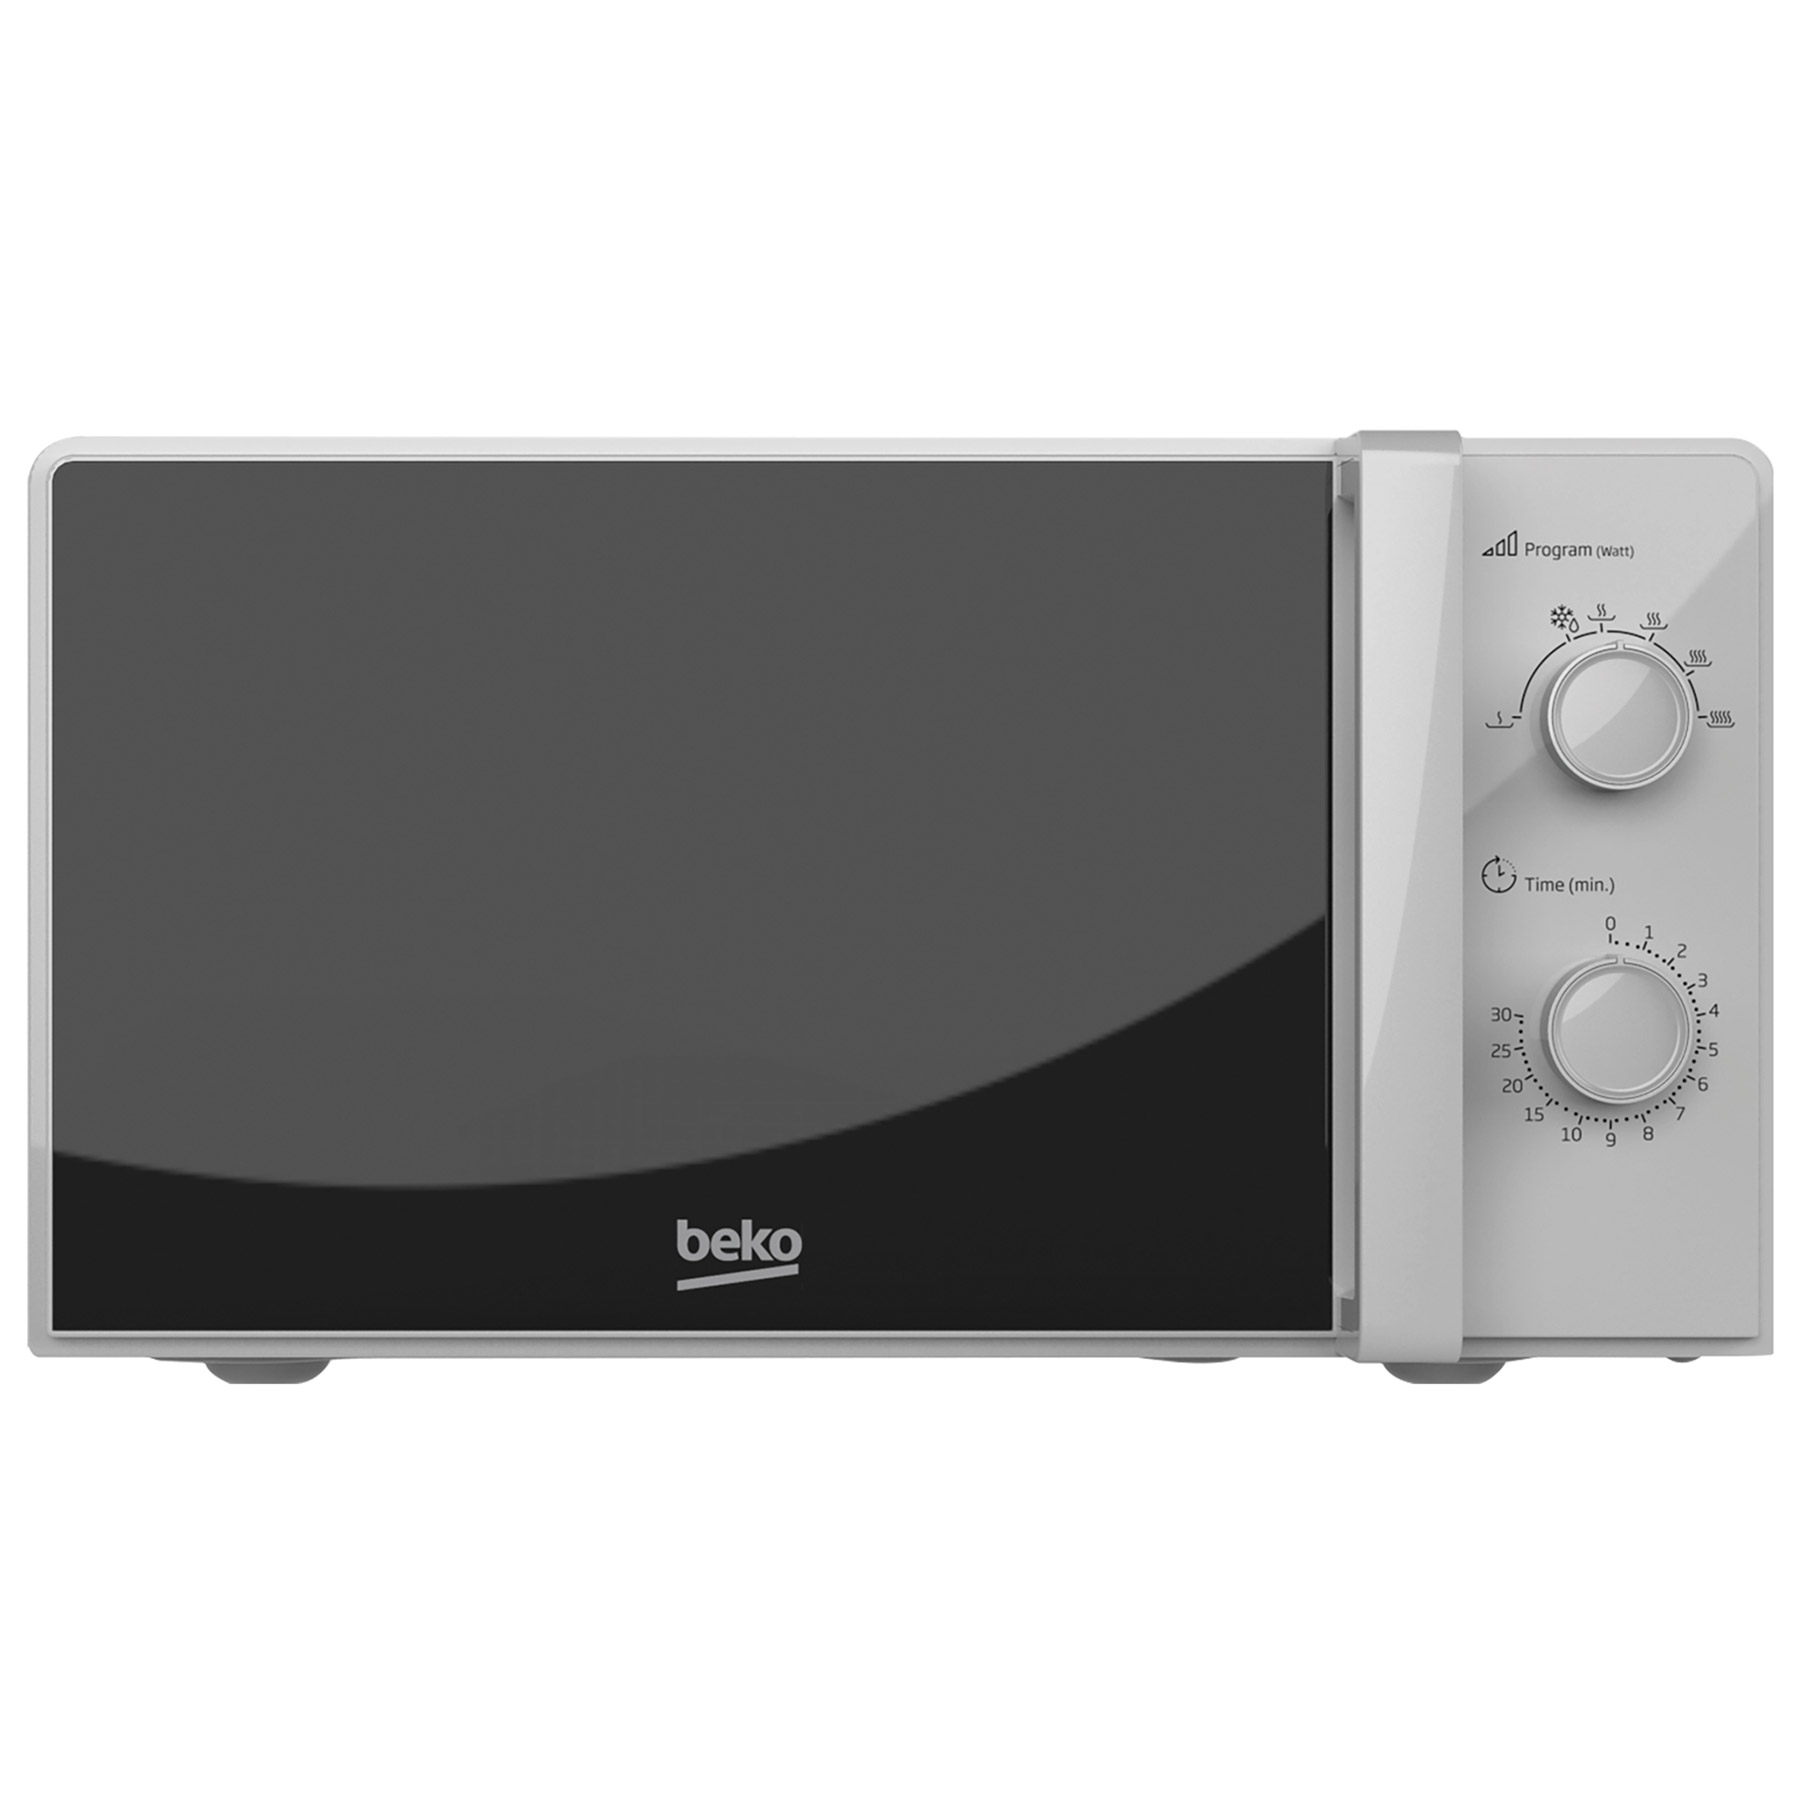 Beko MOC20100SFB Microwave Oven in Silver 20L 700W Manual Control